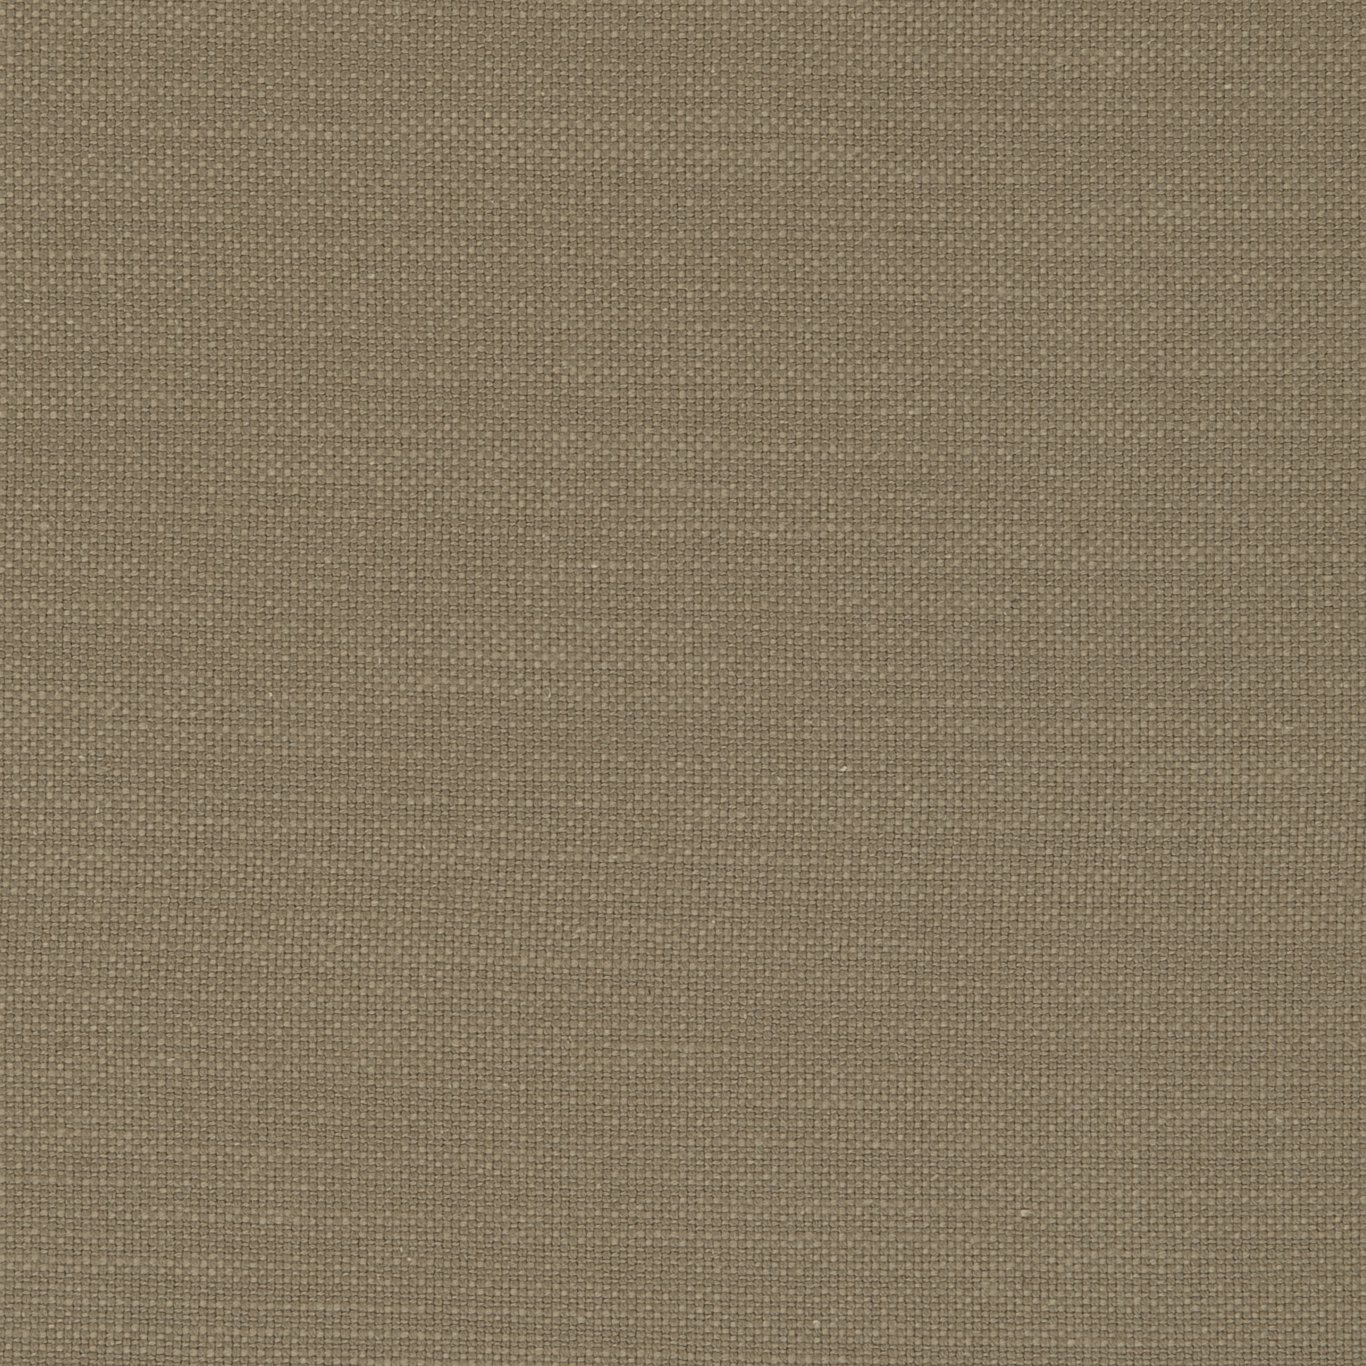 Nantucket Flax Fabric by CNC